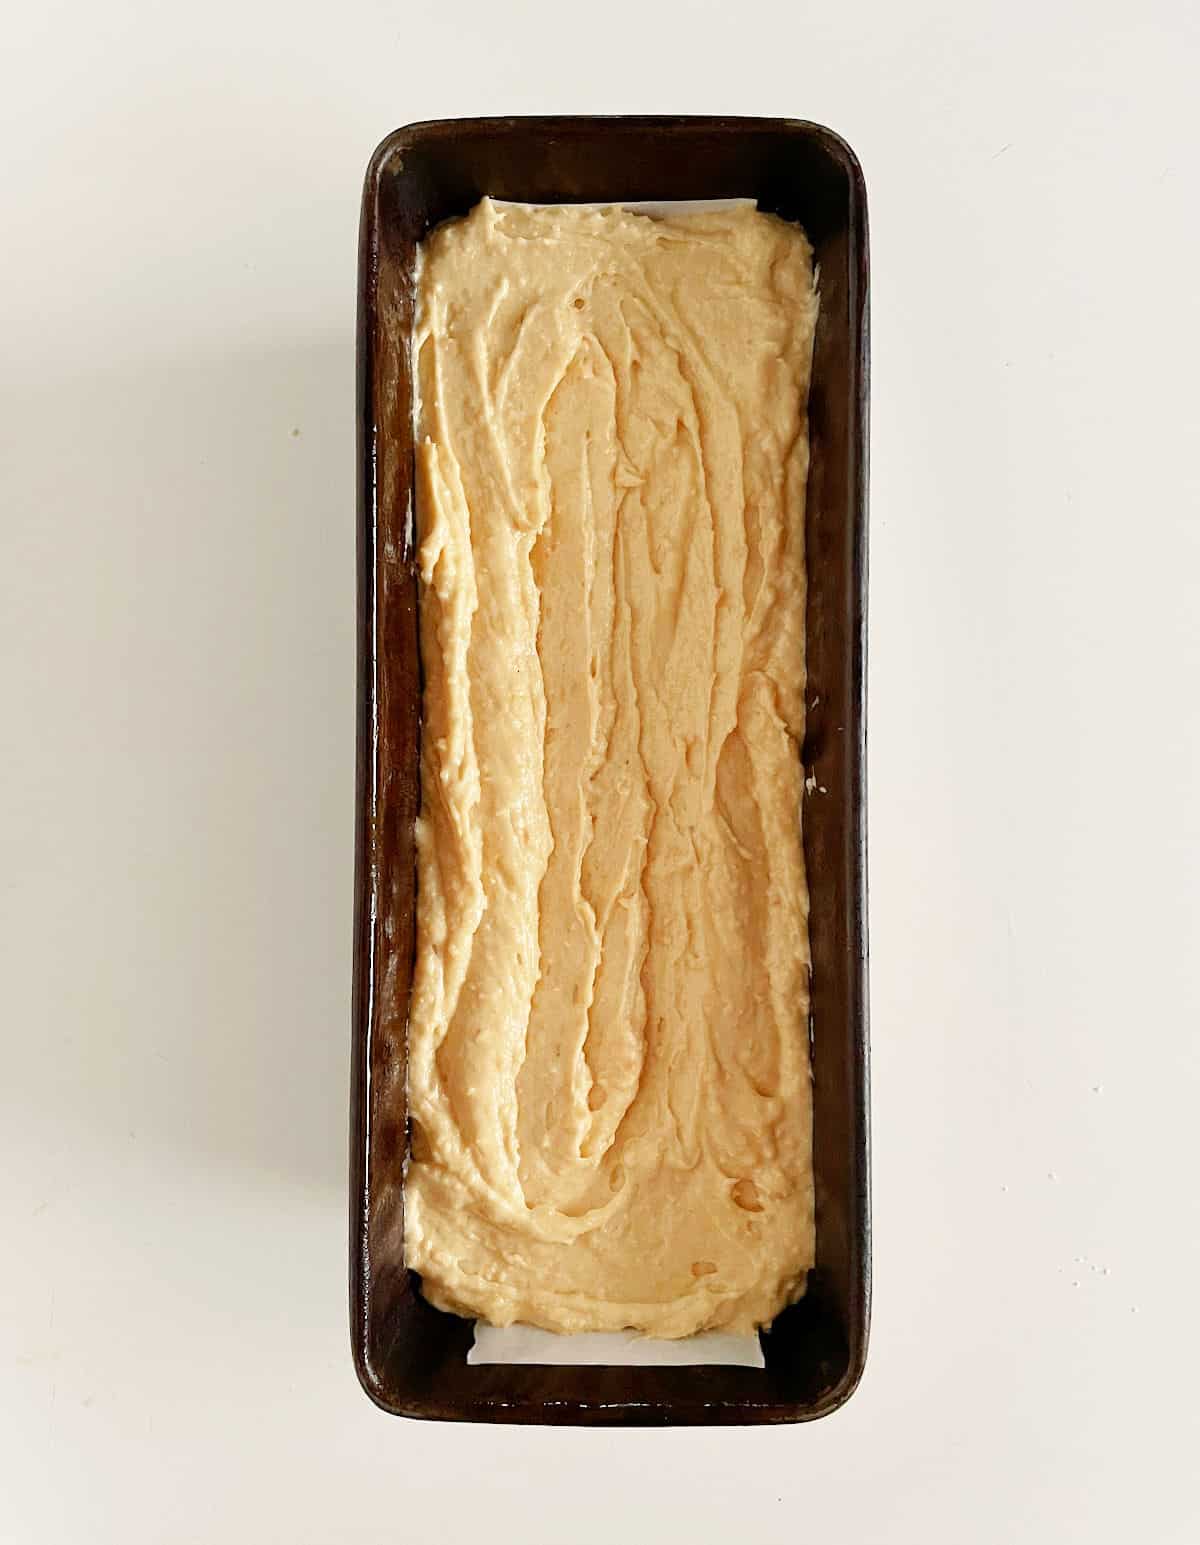 Hazelnut cake batter in a dark loaf pan on a white surface.